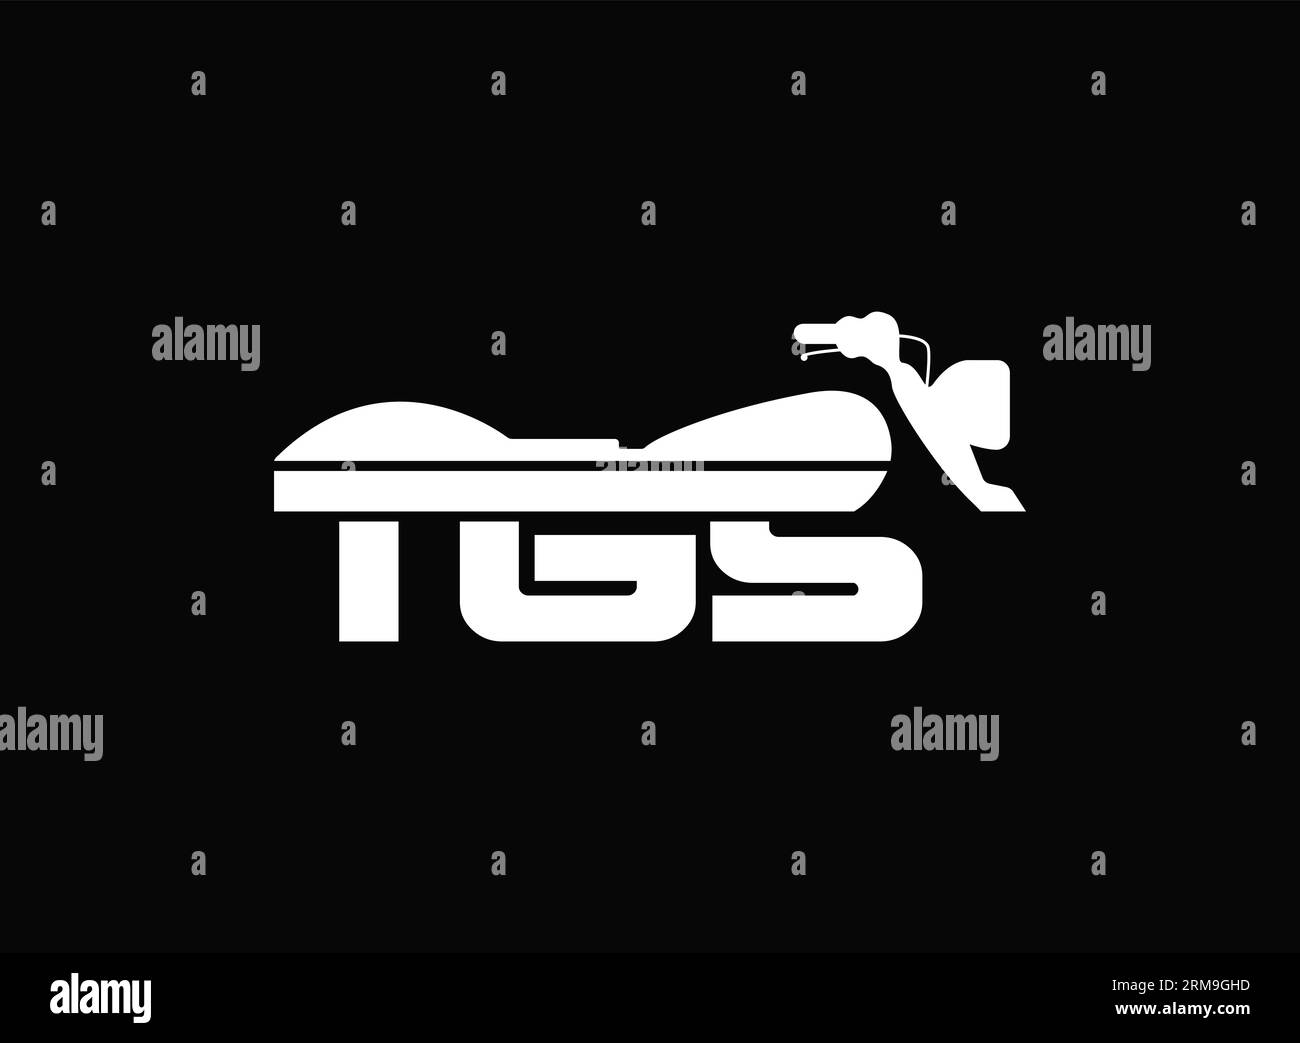 Motorcycle Letter Mark or Monogram or Wordmark Logo Design Vector, TGS logo vector Stock Vector